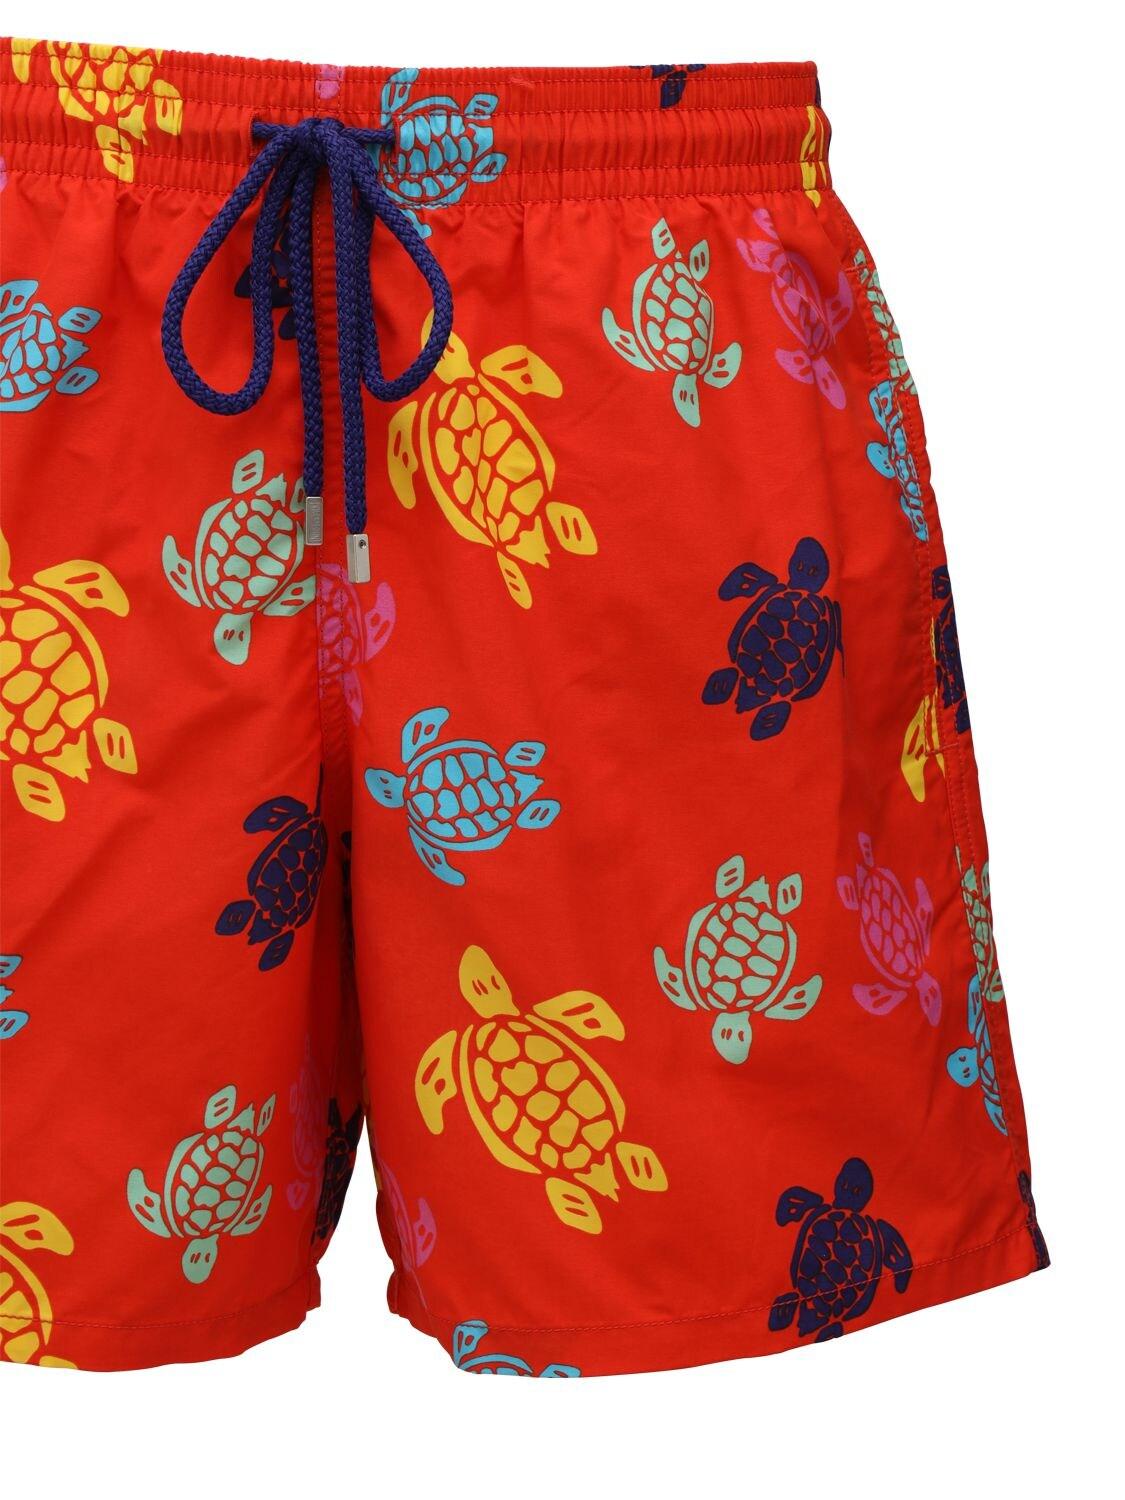 Vilebrequin Moorea Turtle-print Swim Shorts in Red for Men - Lyst